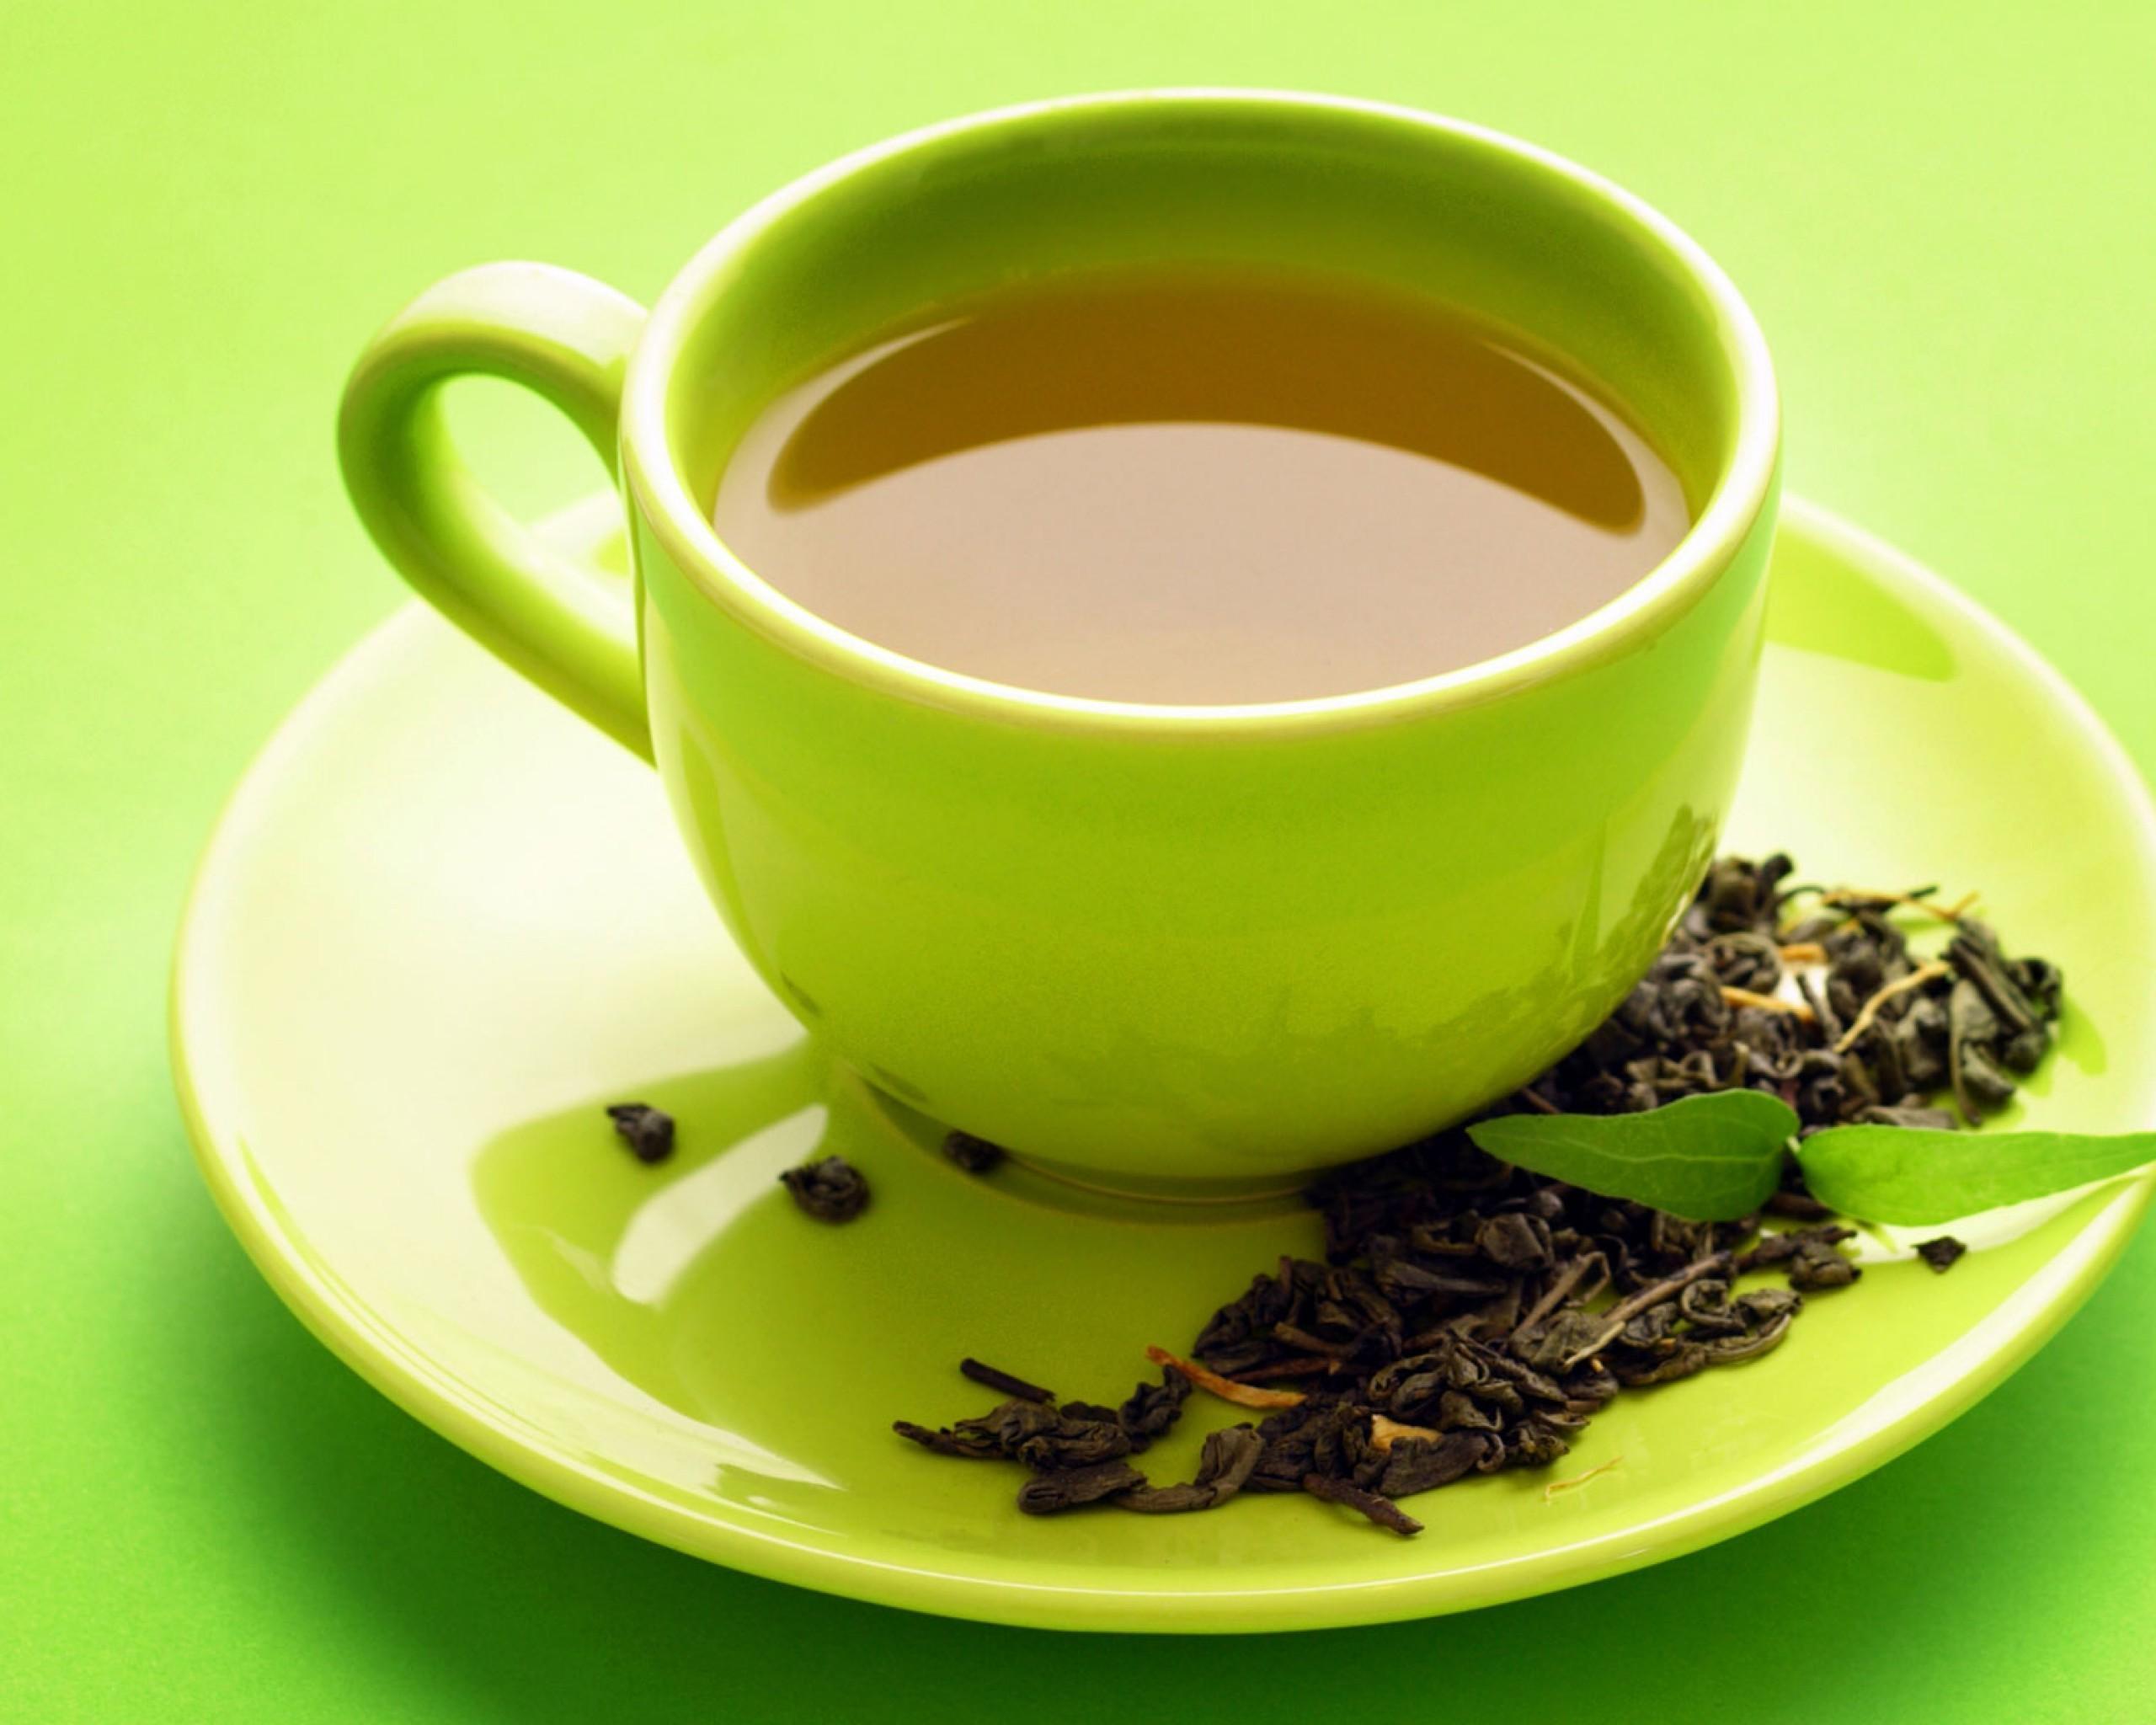 Xicara de chá verde